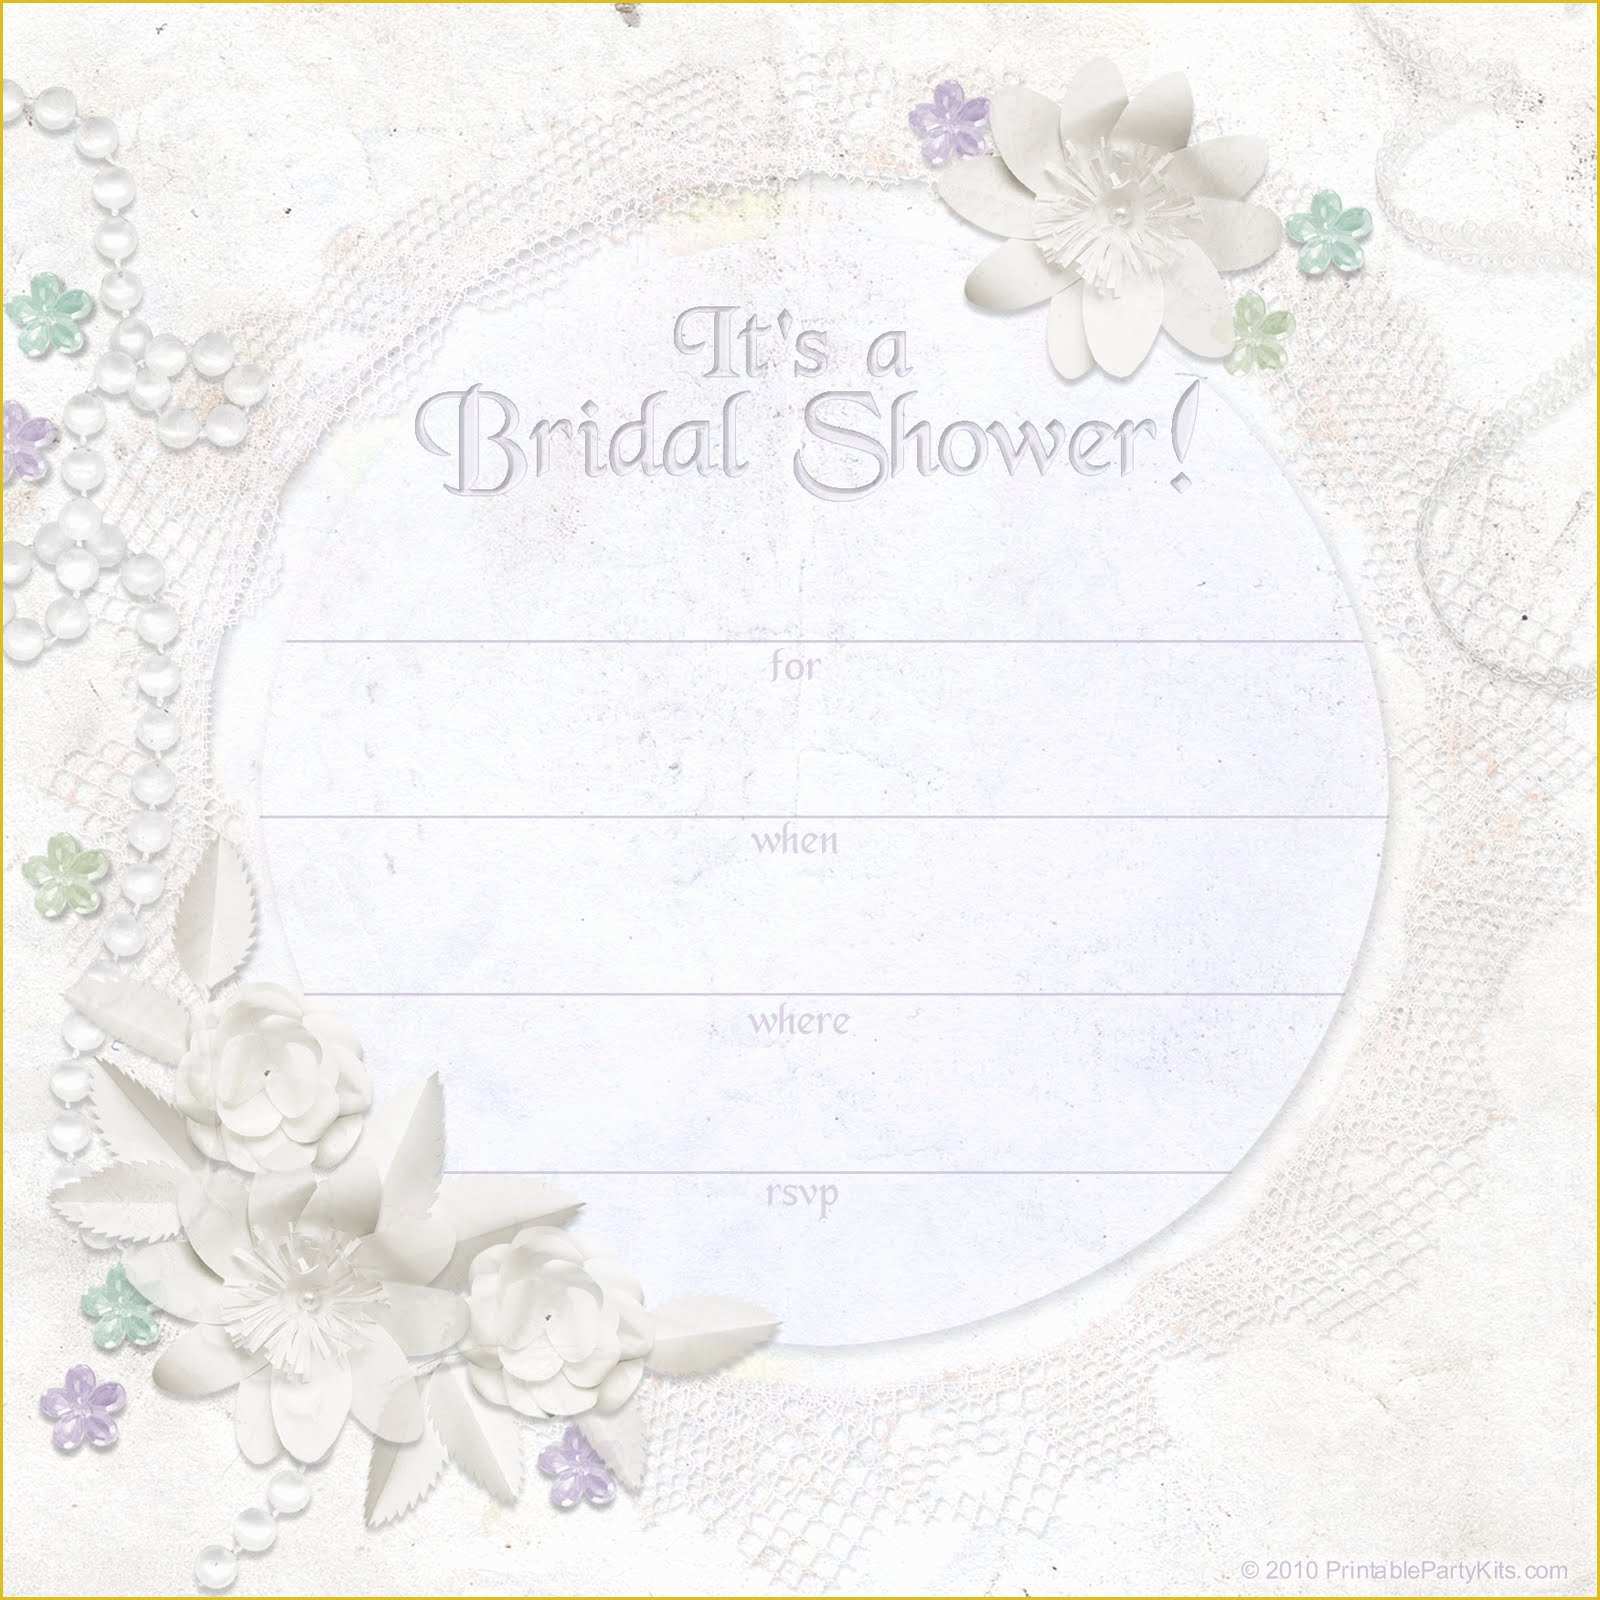 Free Bridal Shower Invitation Templates Photoshop Of Free Printable Party Invitations Ivory Dreams Bridal